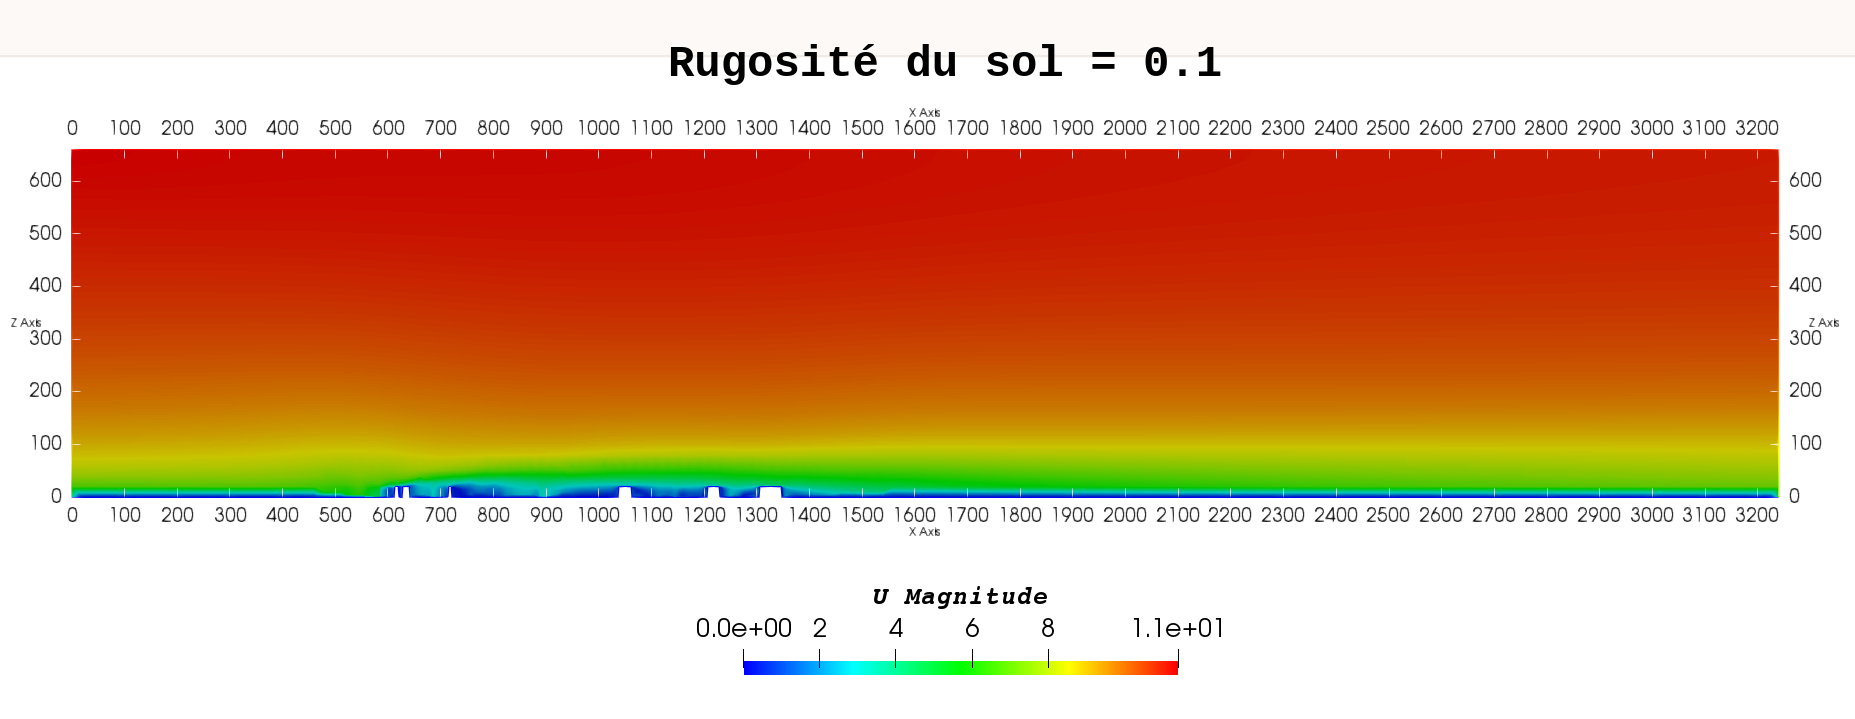 simulations_vent_plateau_d_assy_rugosite_0.1